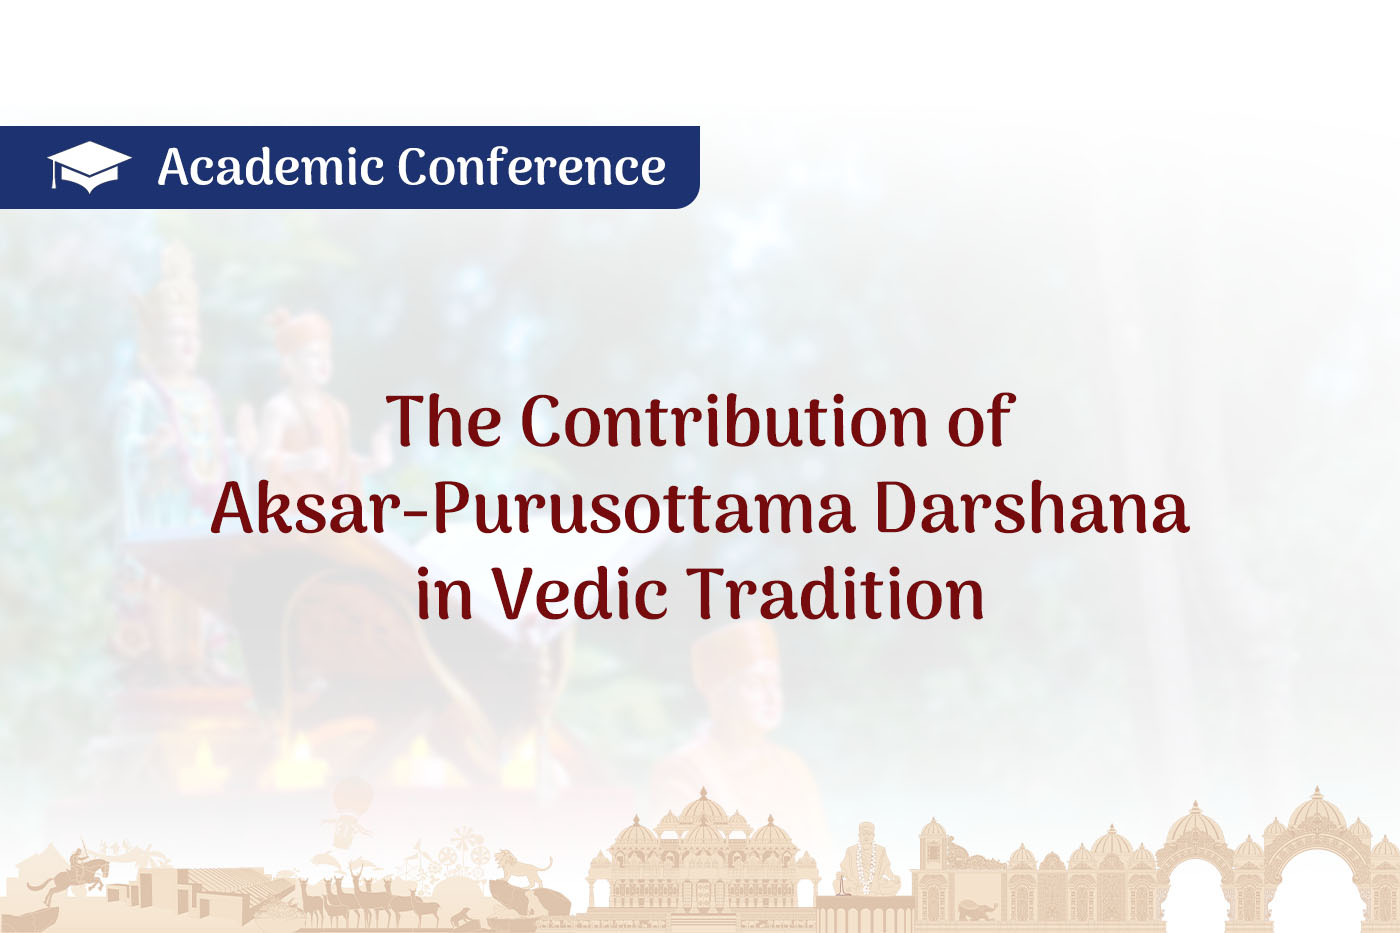 The Contribution of Aksar-Purusottama Darshana in Vedic Tradition